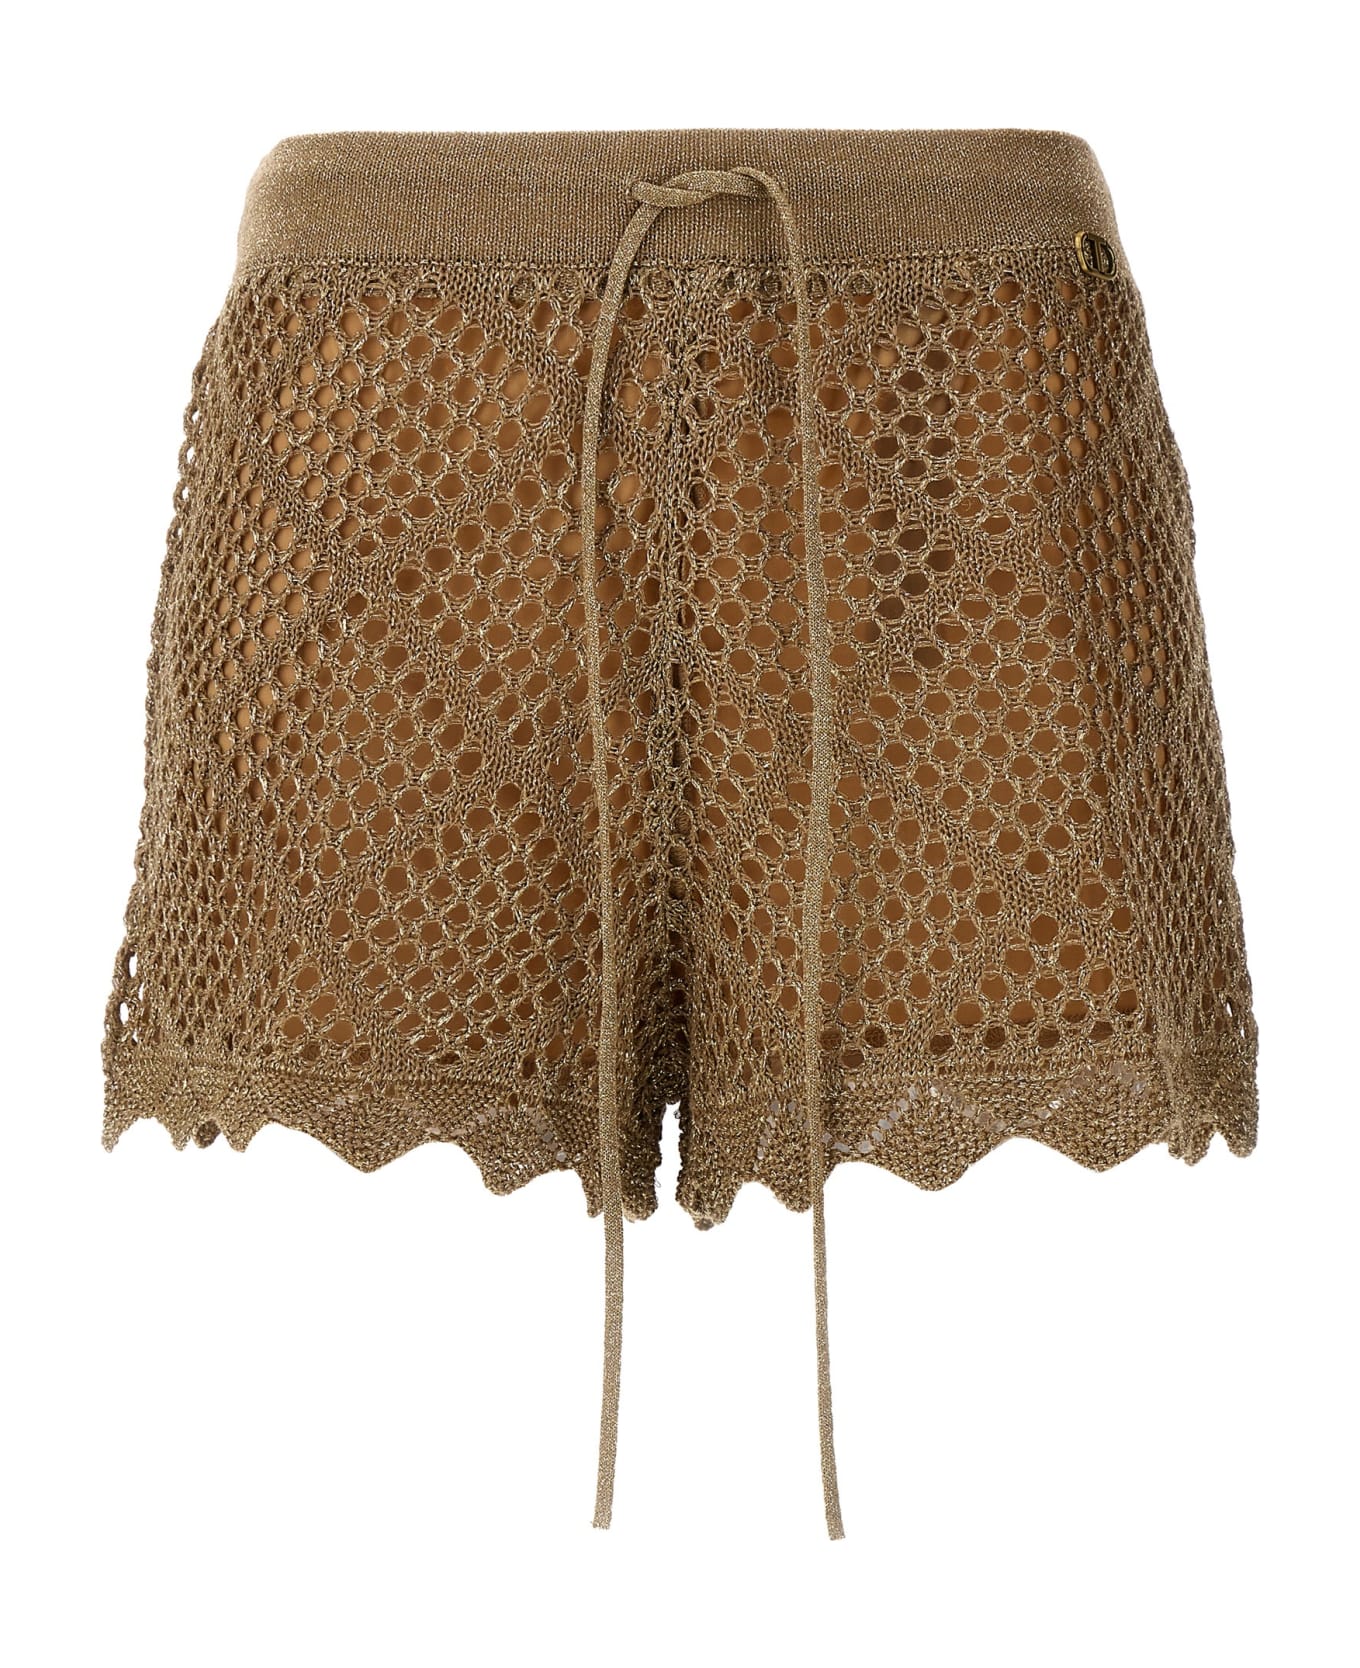 TwinSet Knitted Shorts - Hazelnut